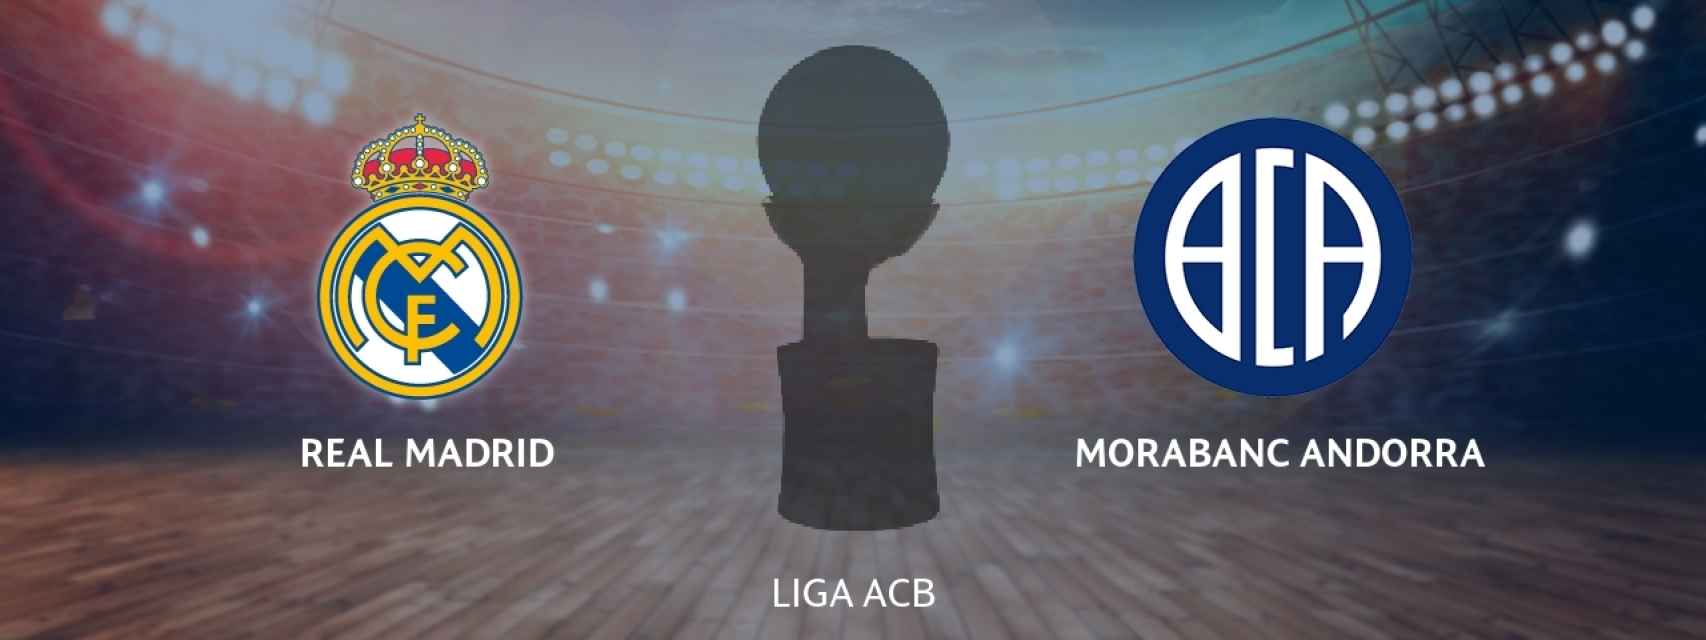 Real Madrid - MoraBanc Andorra